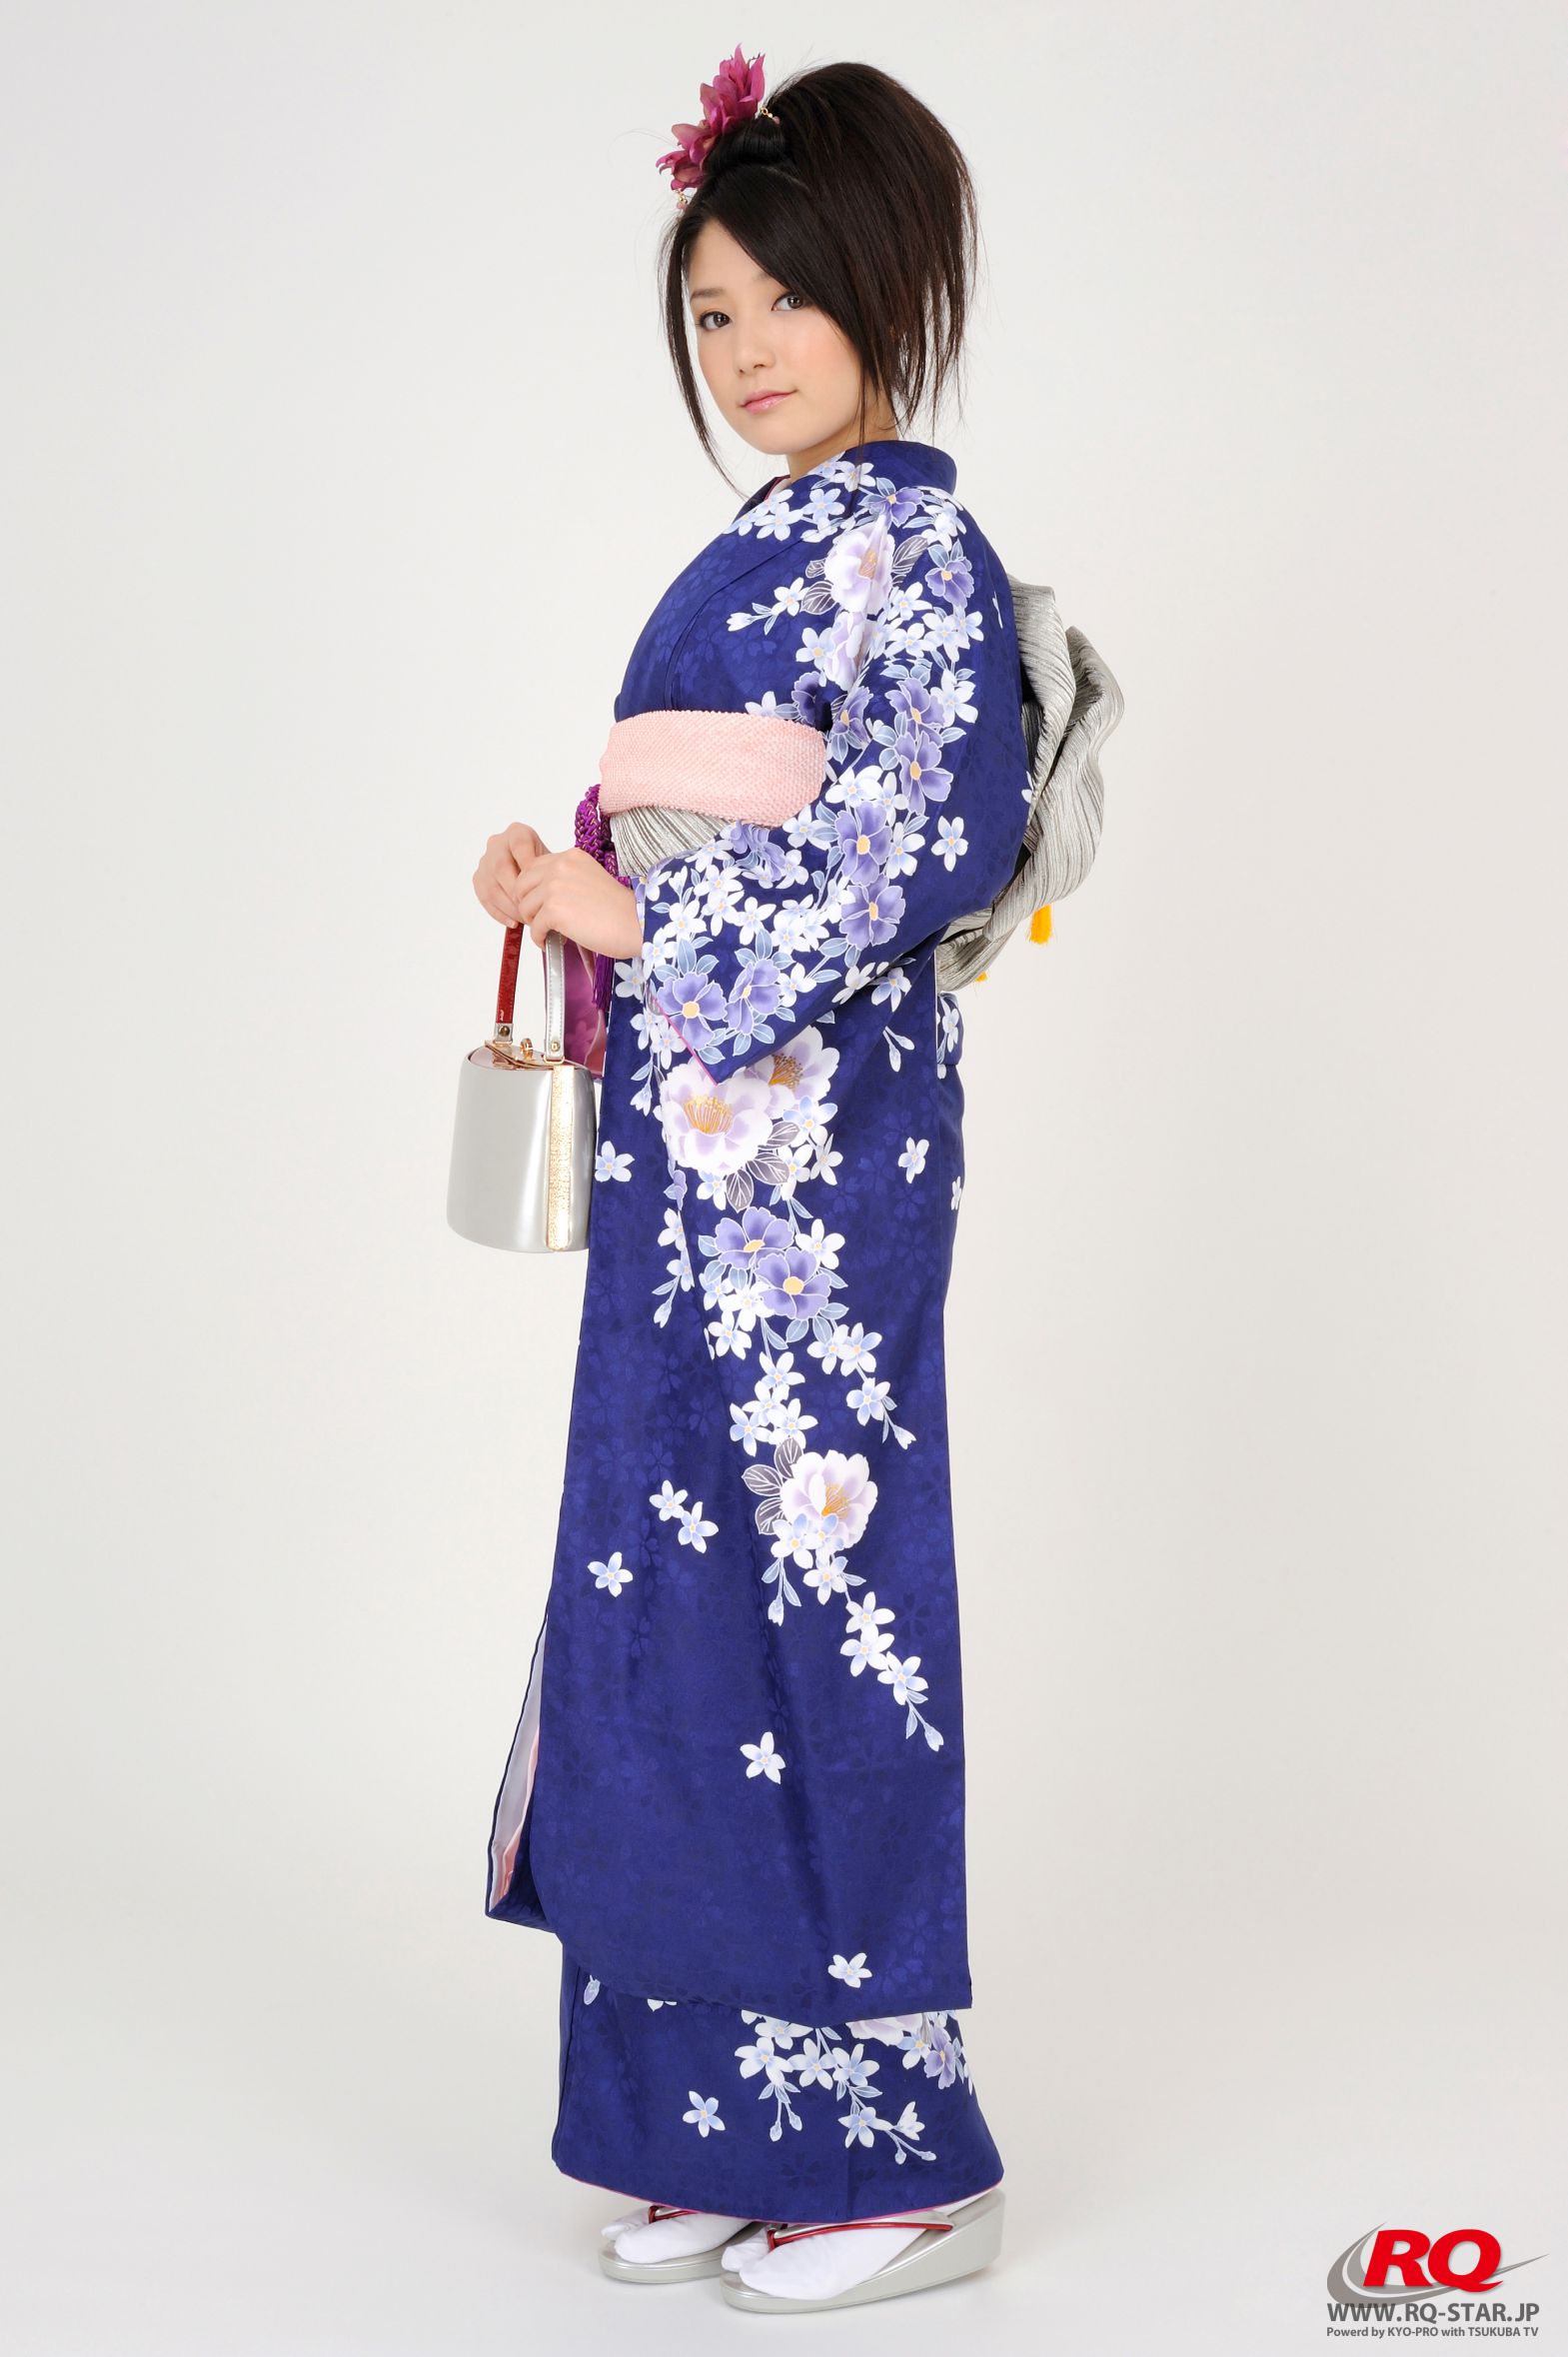 [RQ-STAR] NO.00068 古崎瞳 謹賀新年 Kimono – Happy New Year 和服系列5